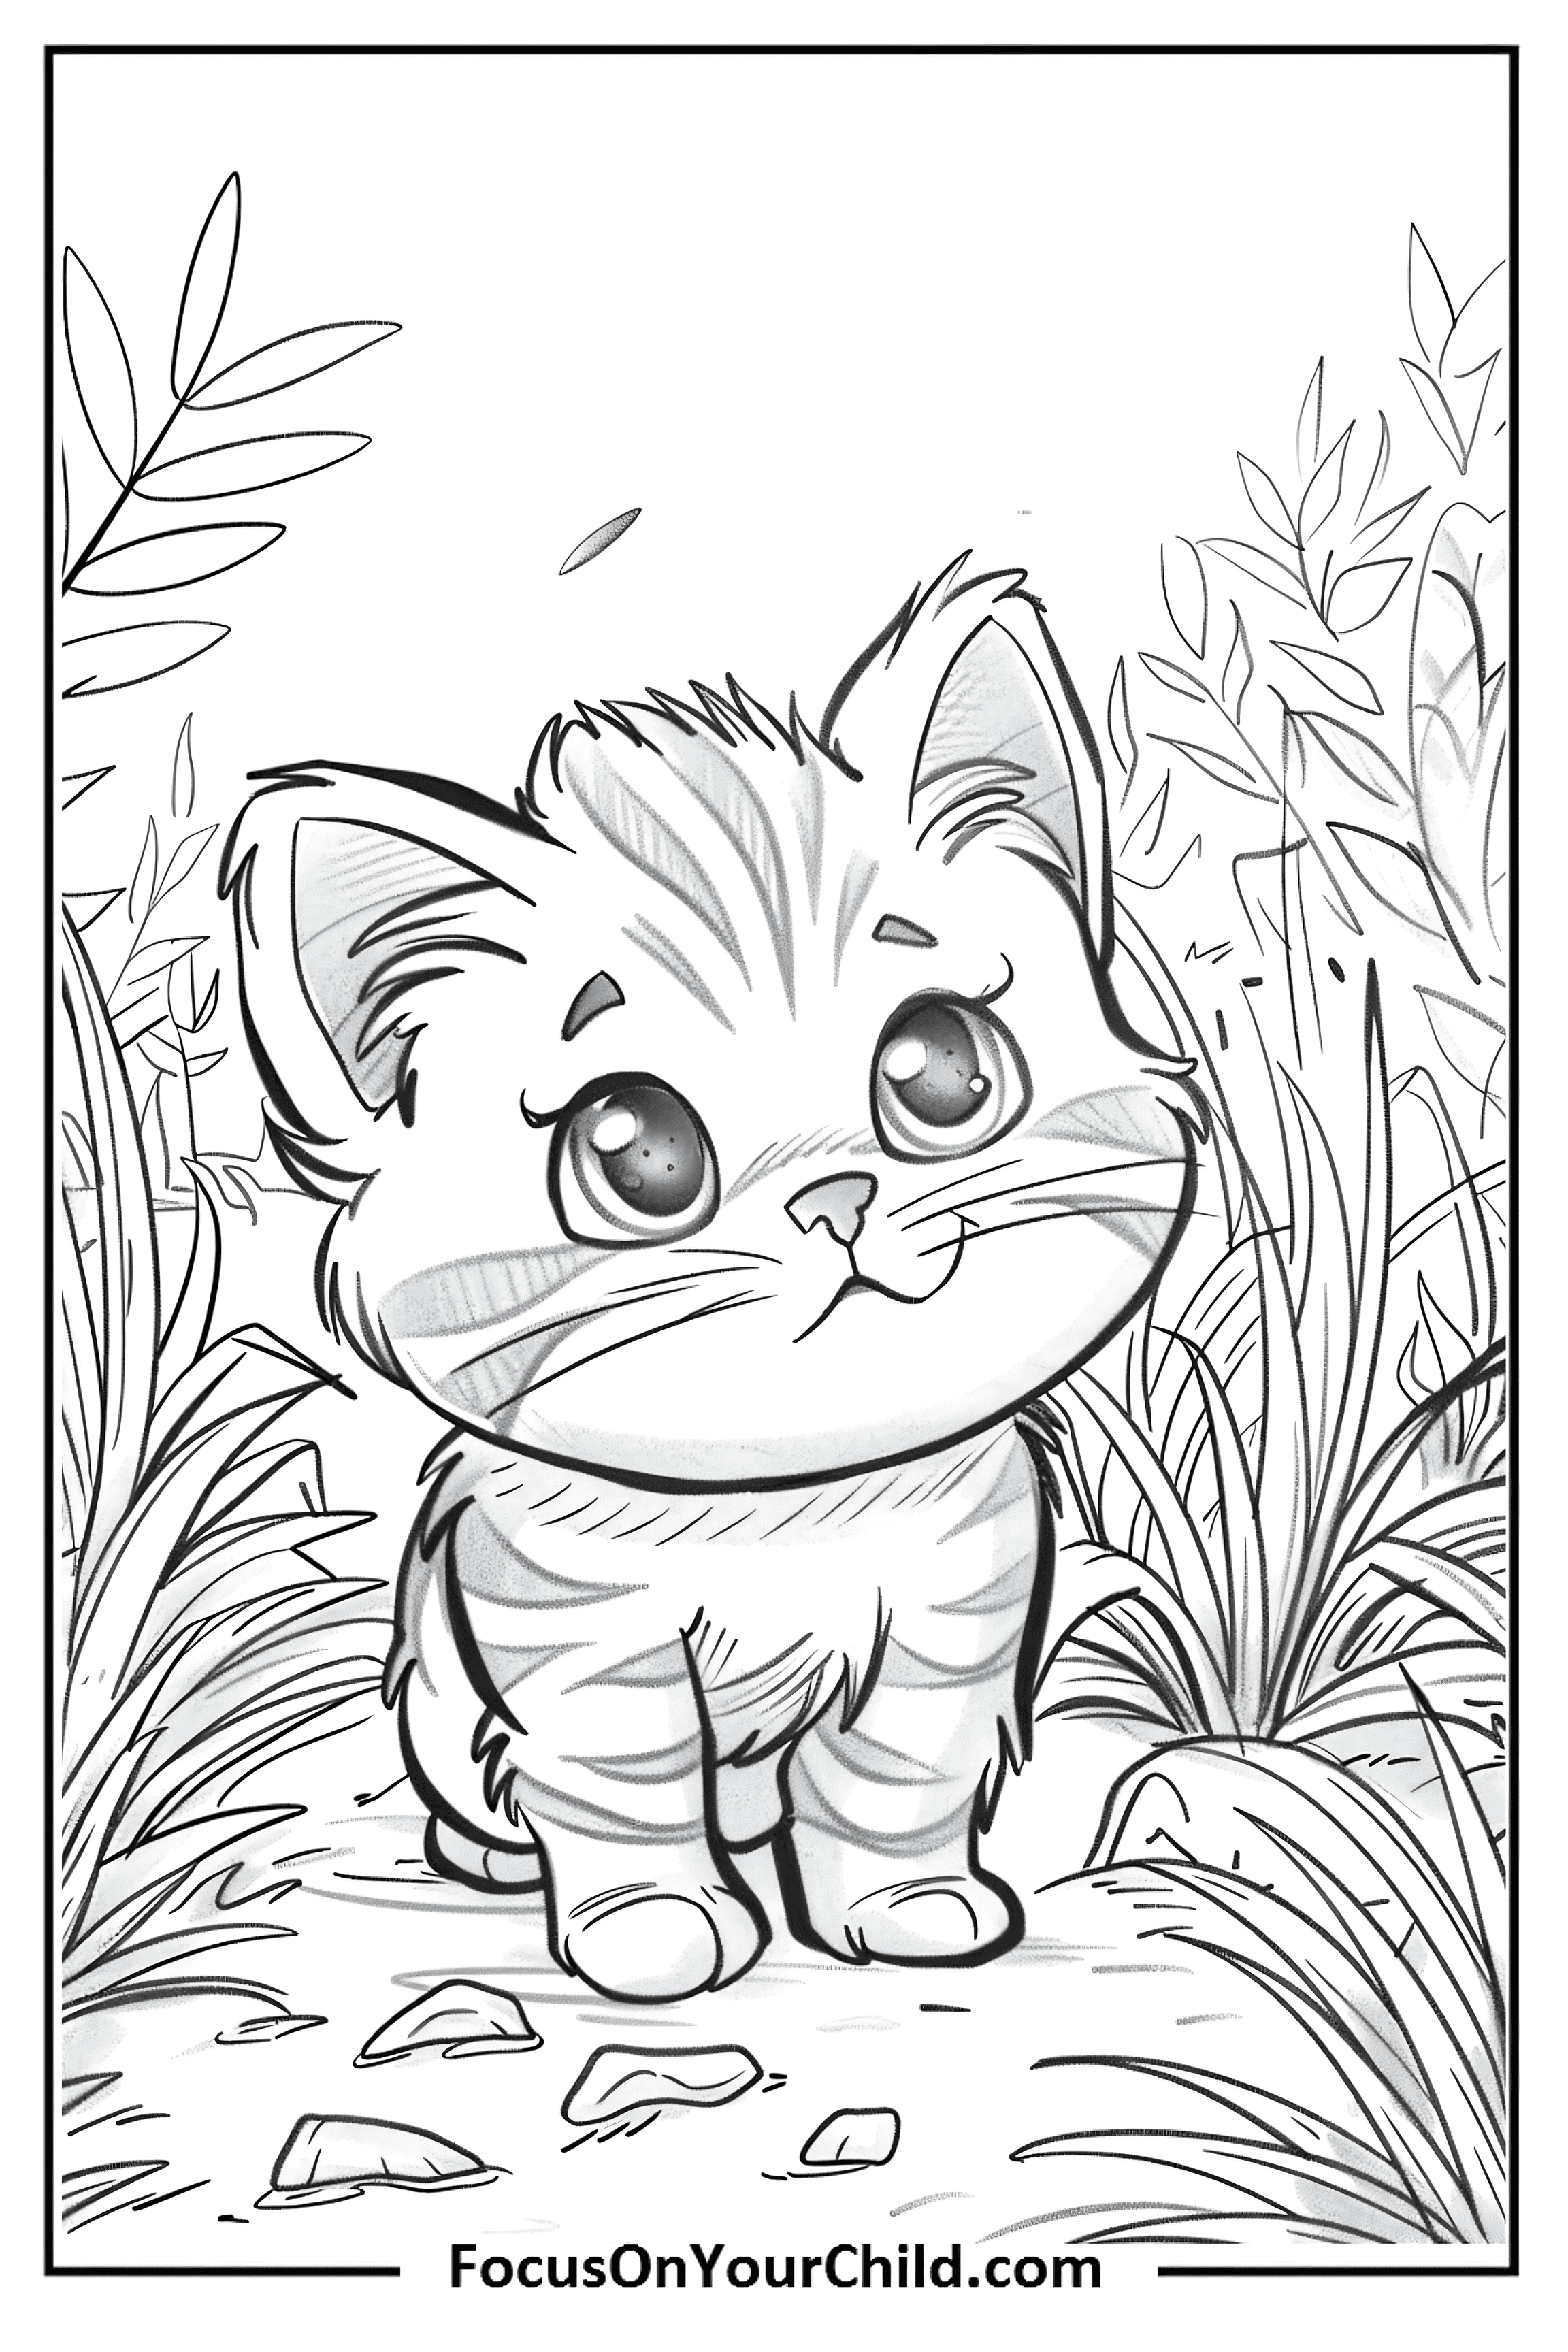 Adorable kitten sitting in lush garden, showcasing innocence and curiosity.